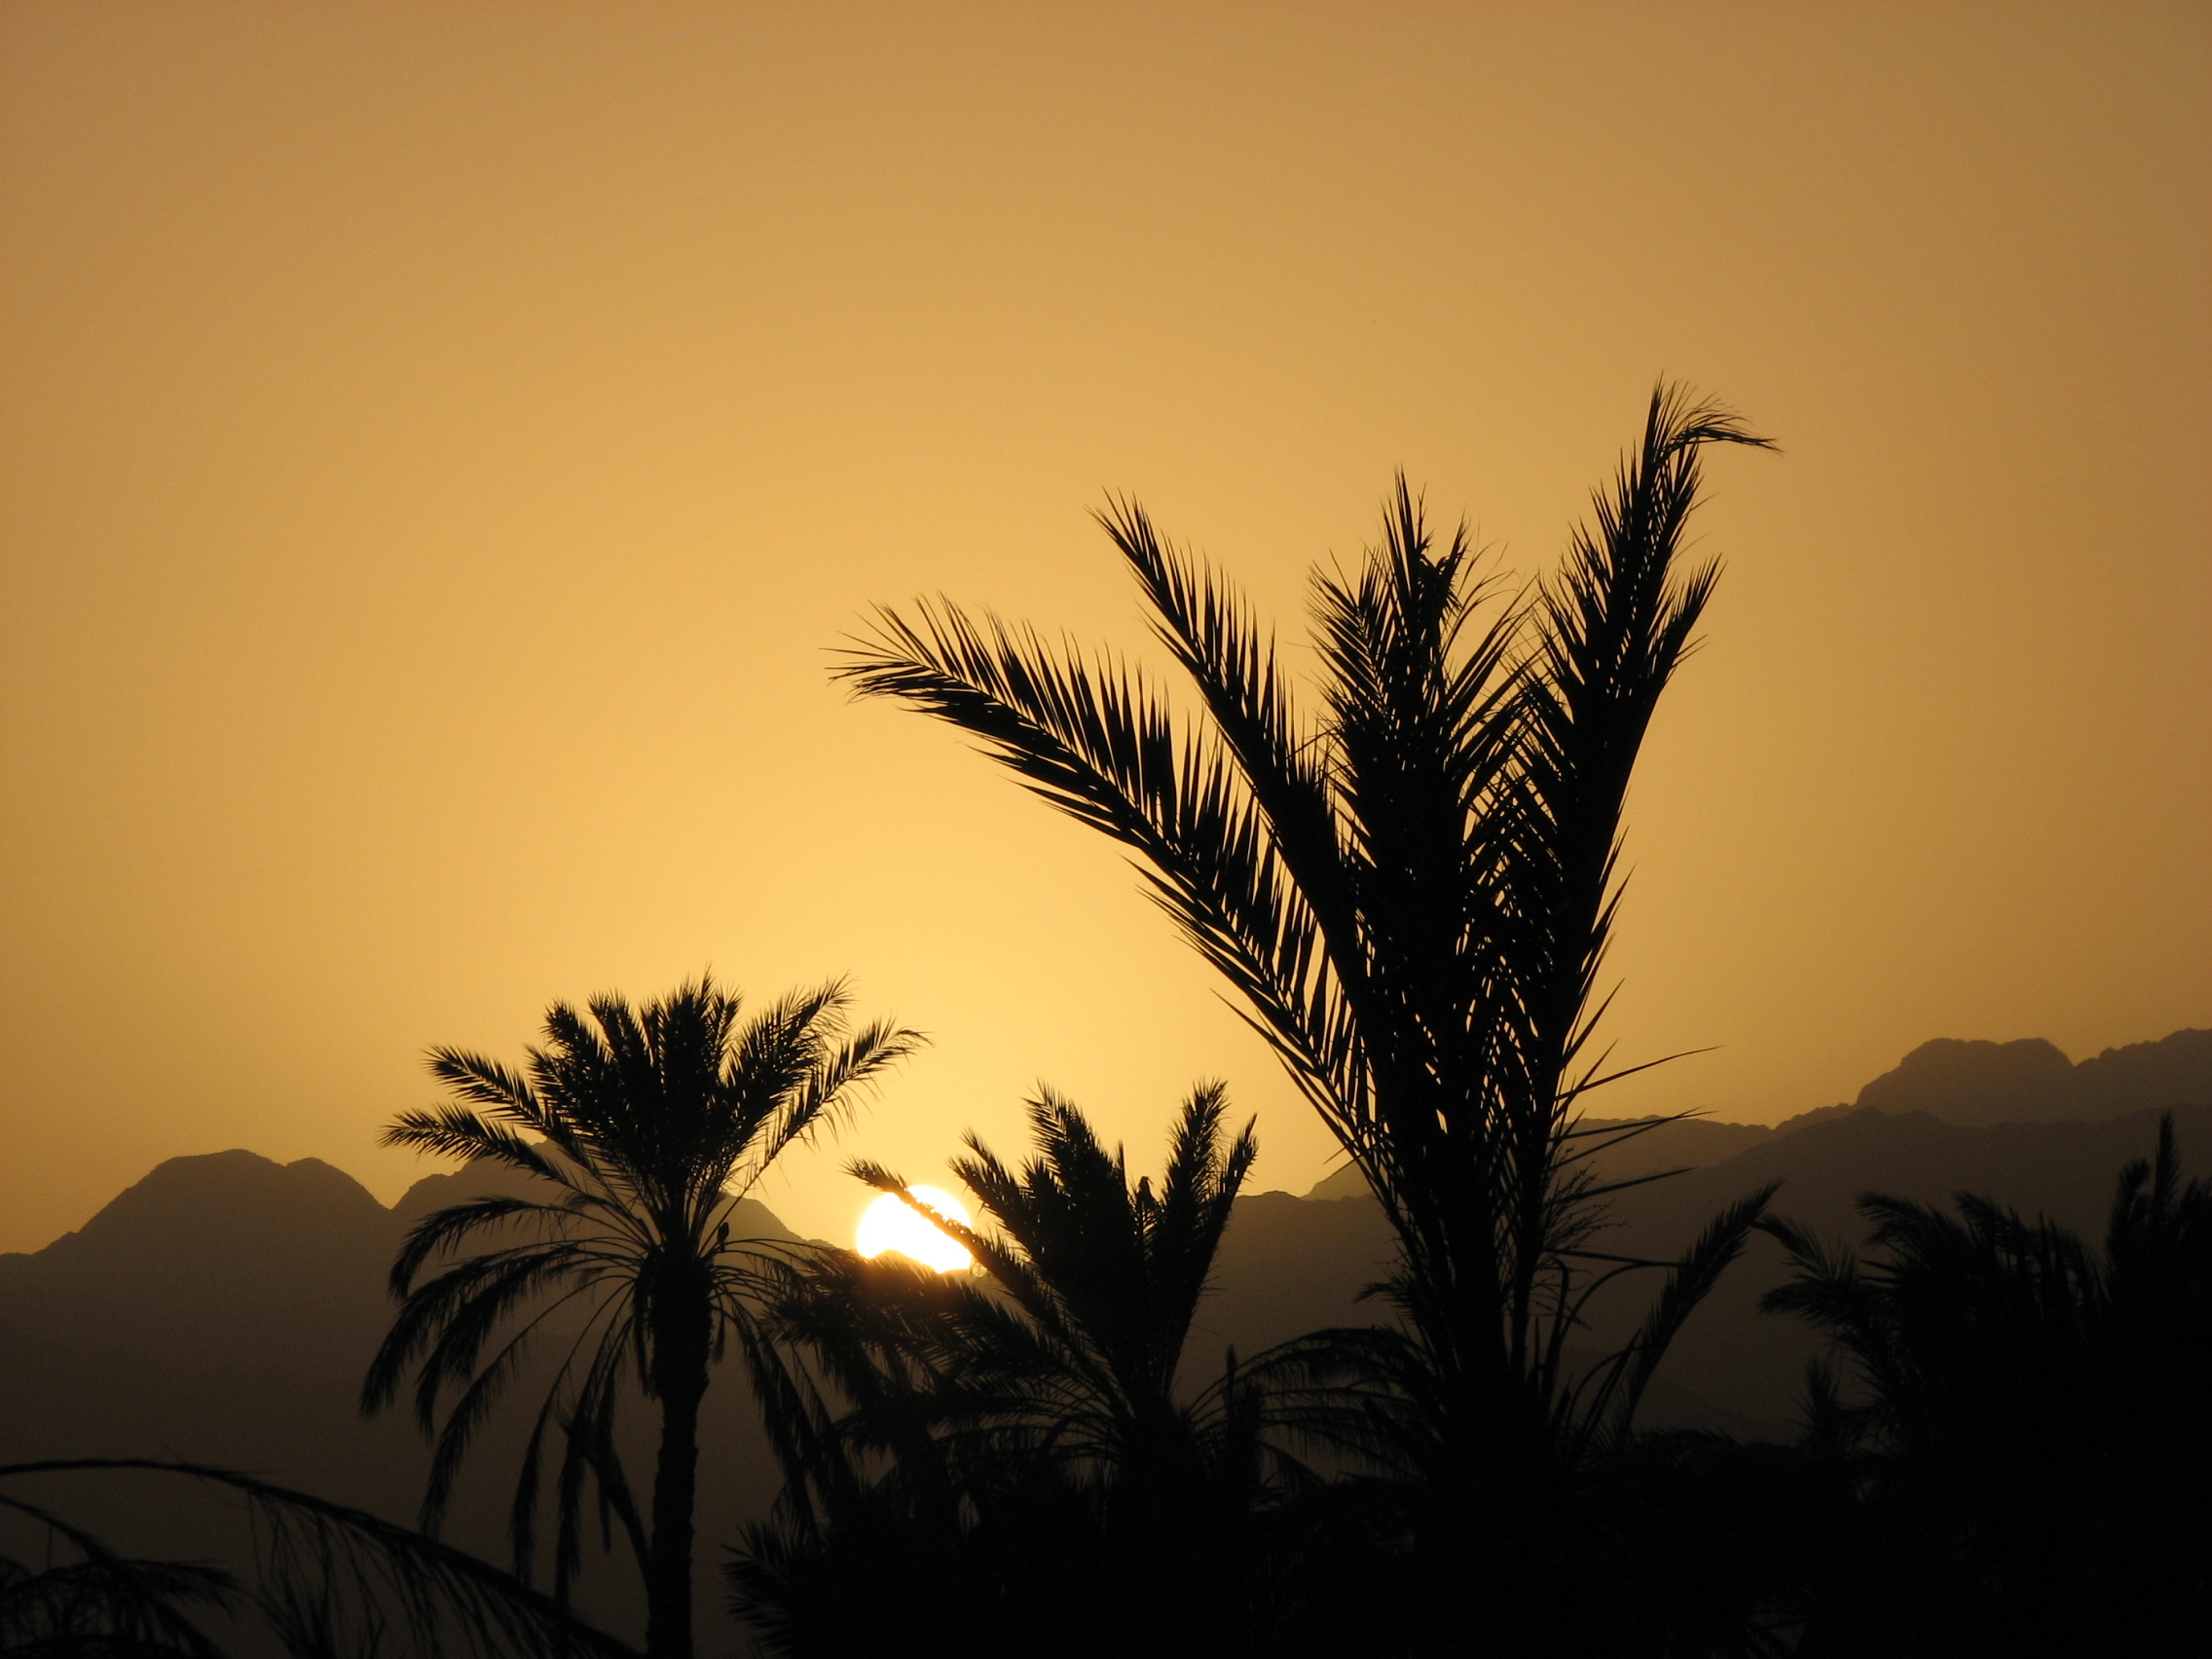 Sunset in fujairah photo